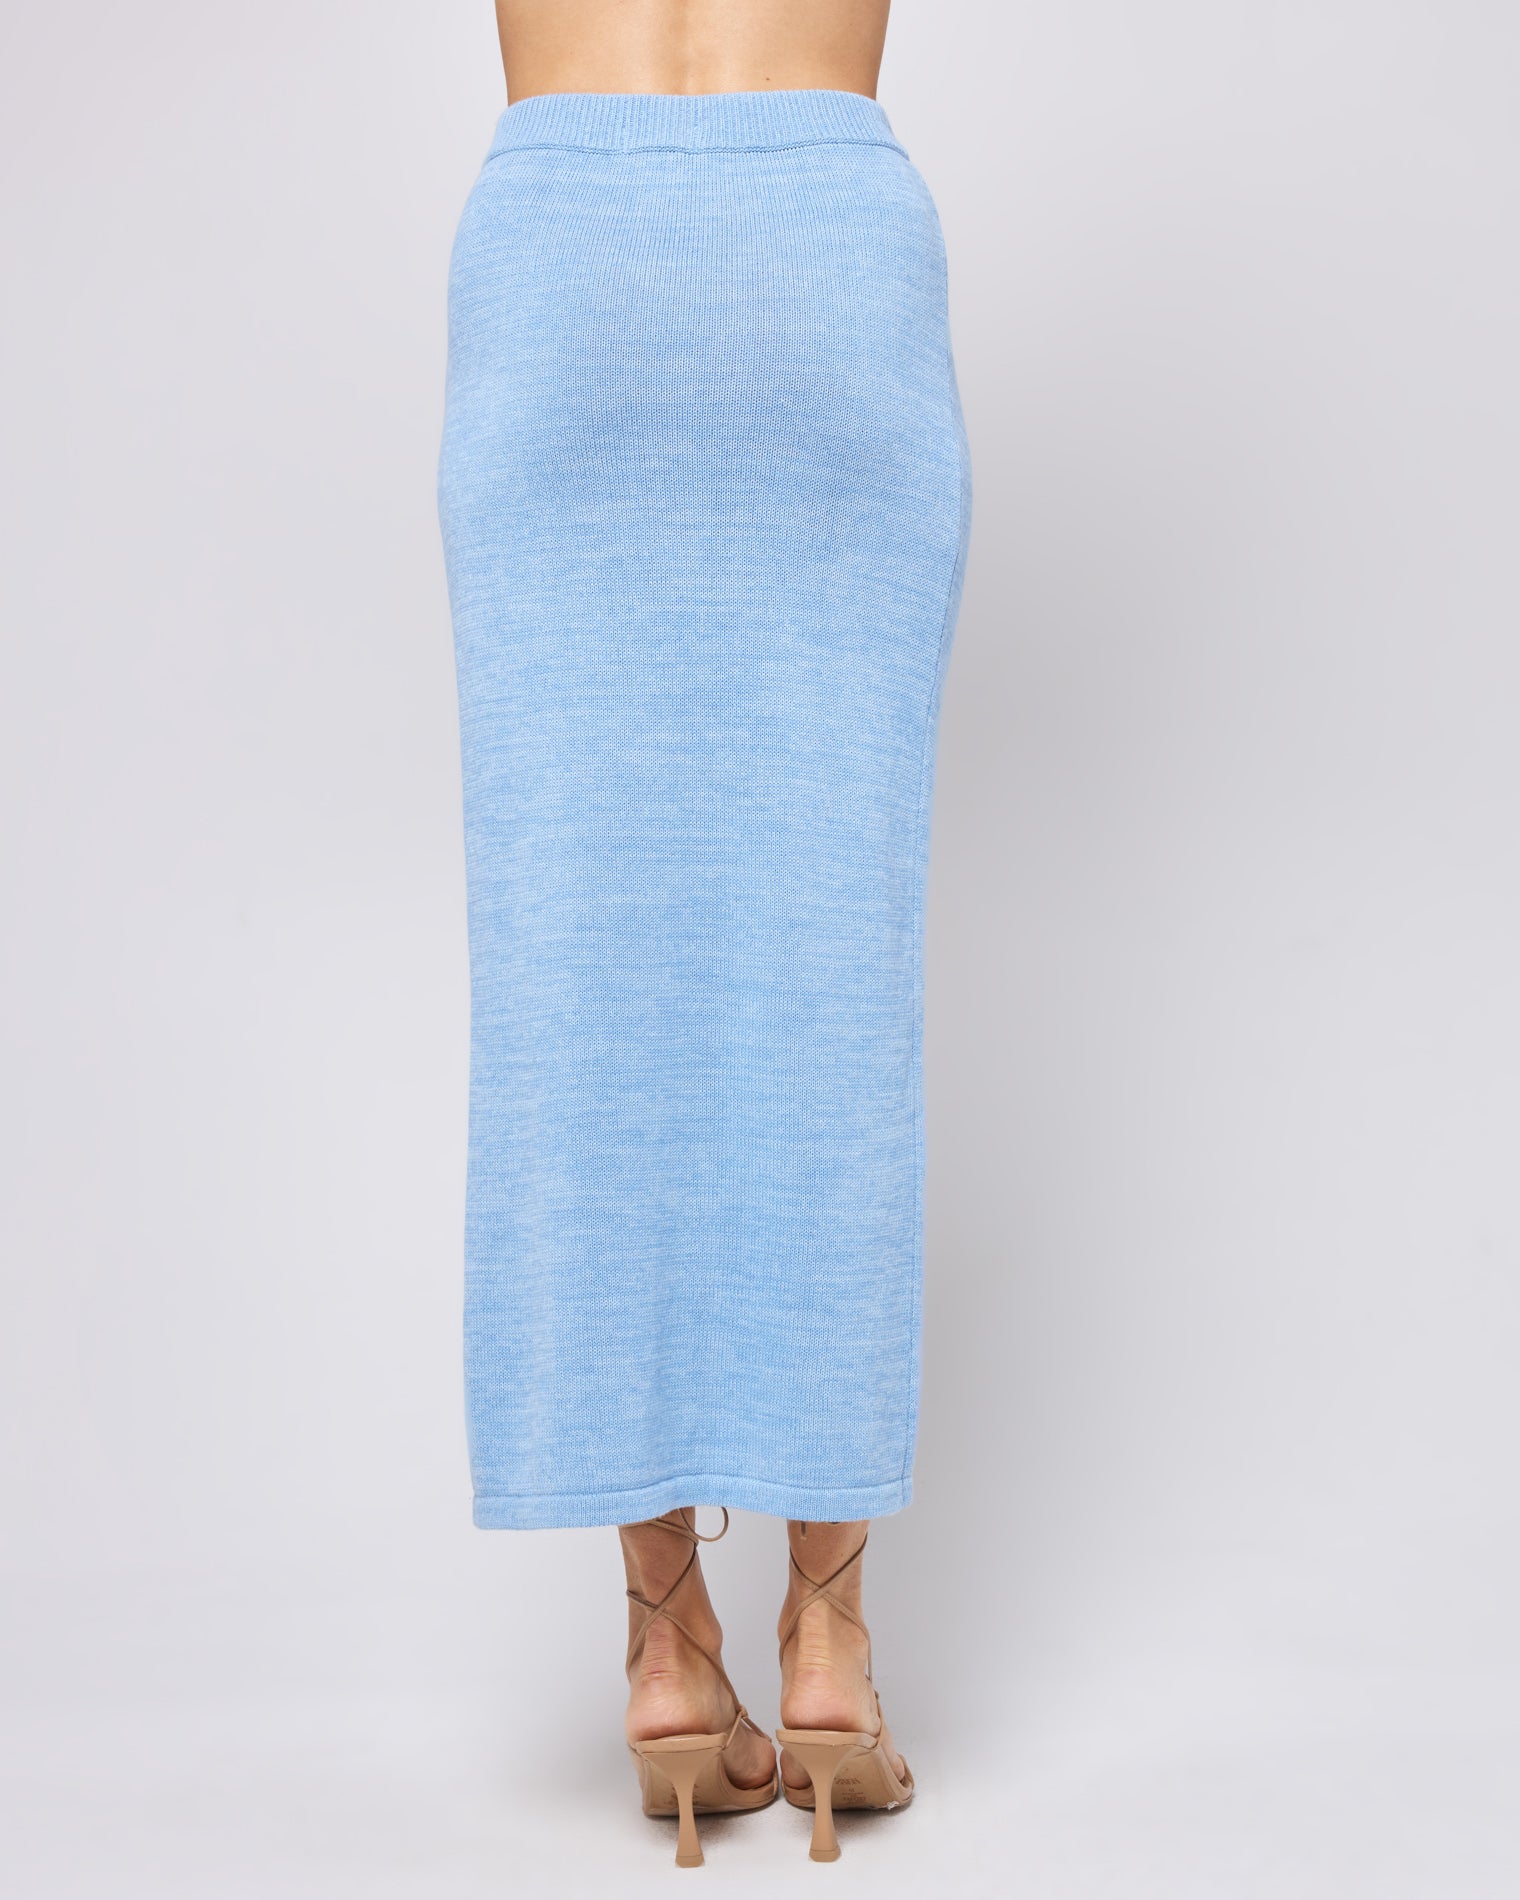 Siren Skirt - Aura Aura | Model: Lura (size: S)